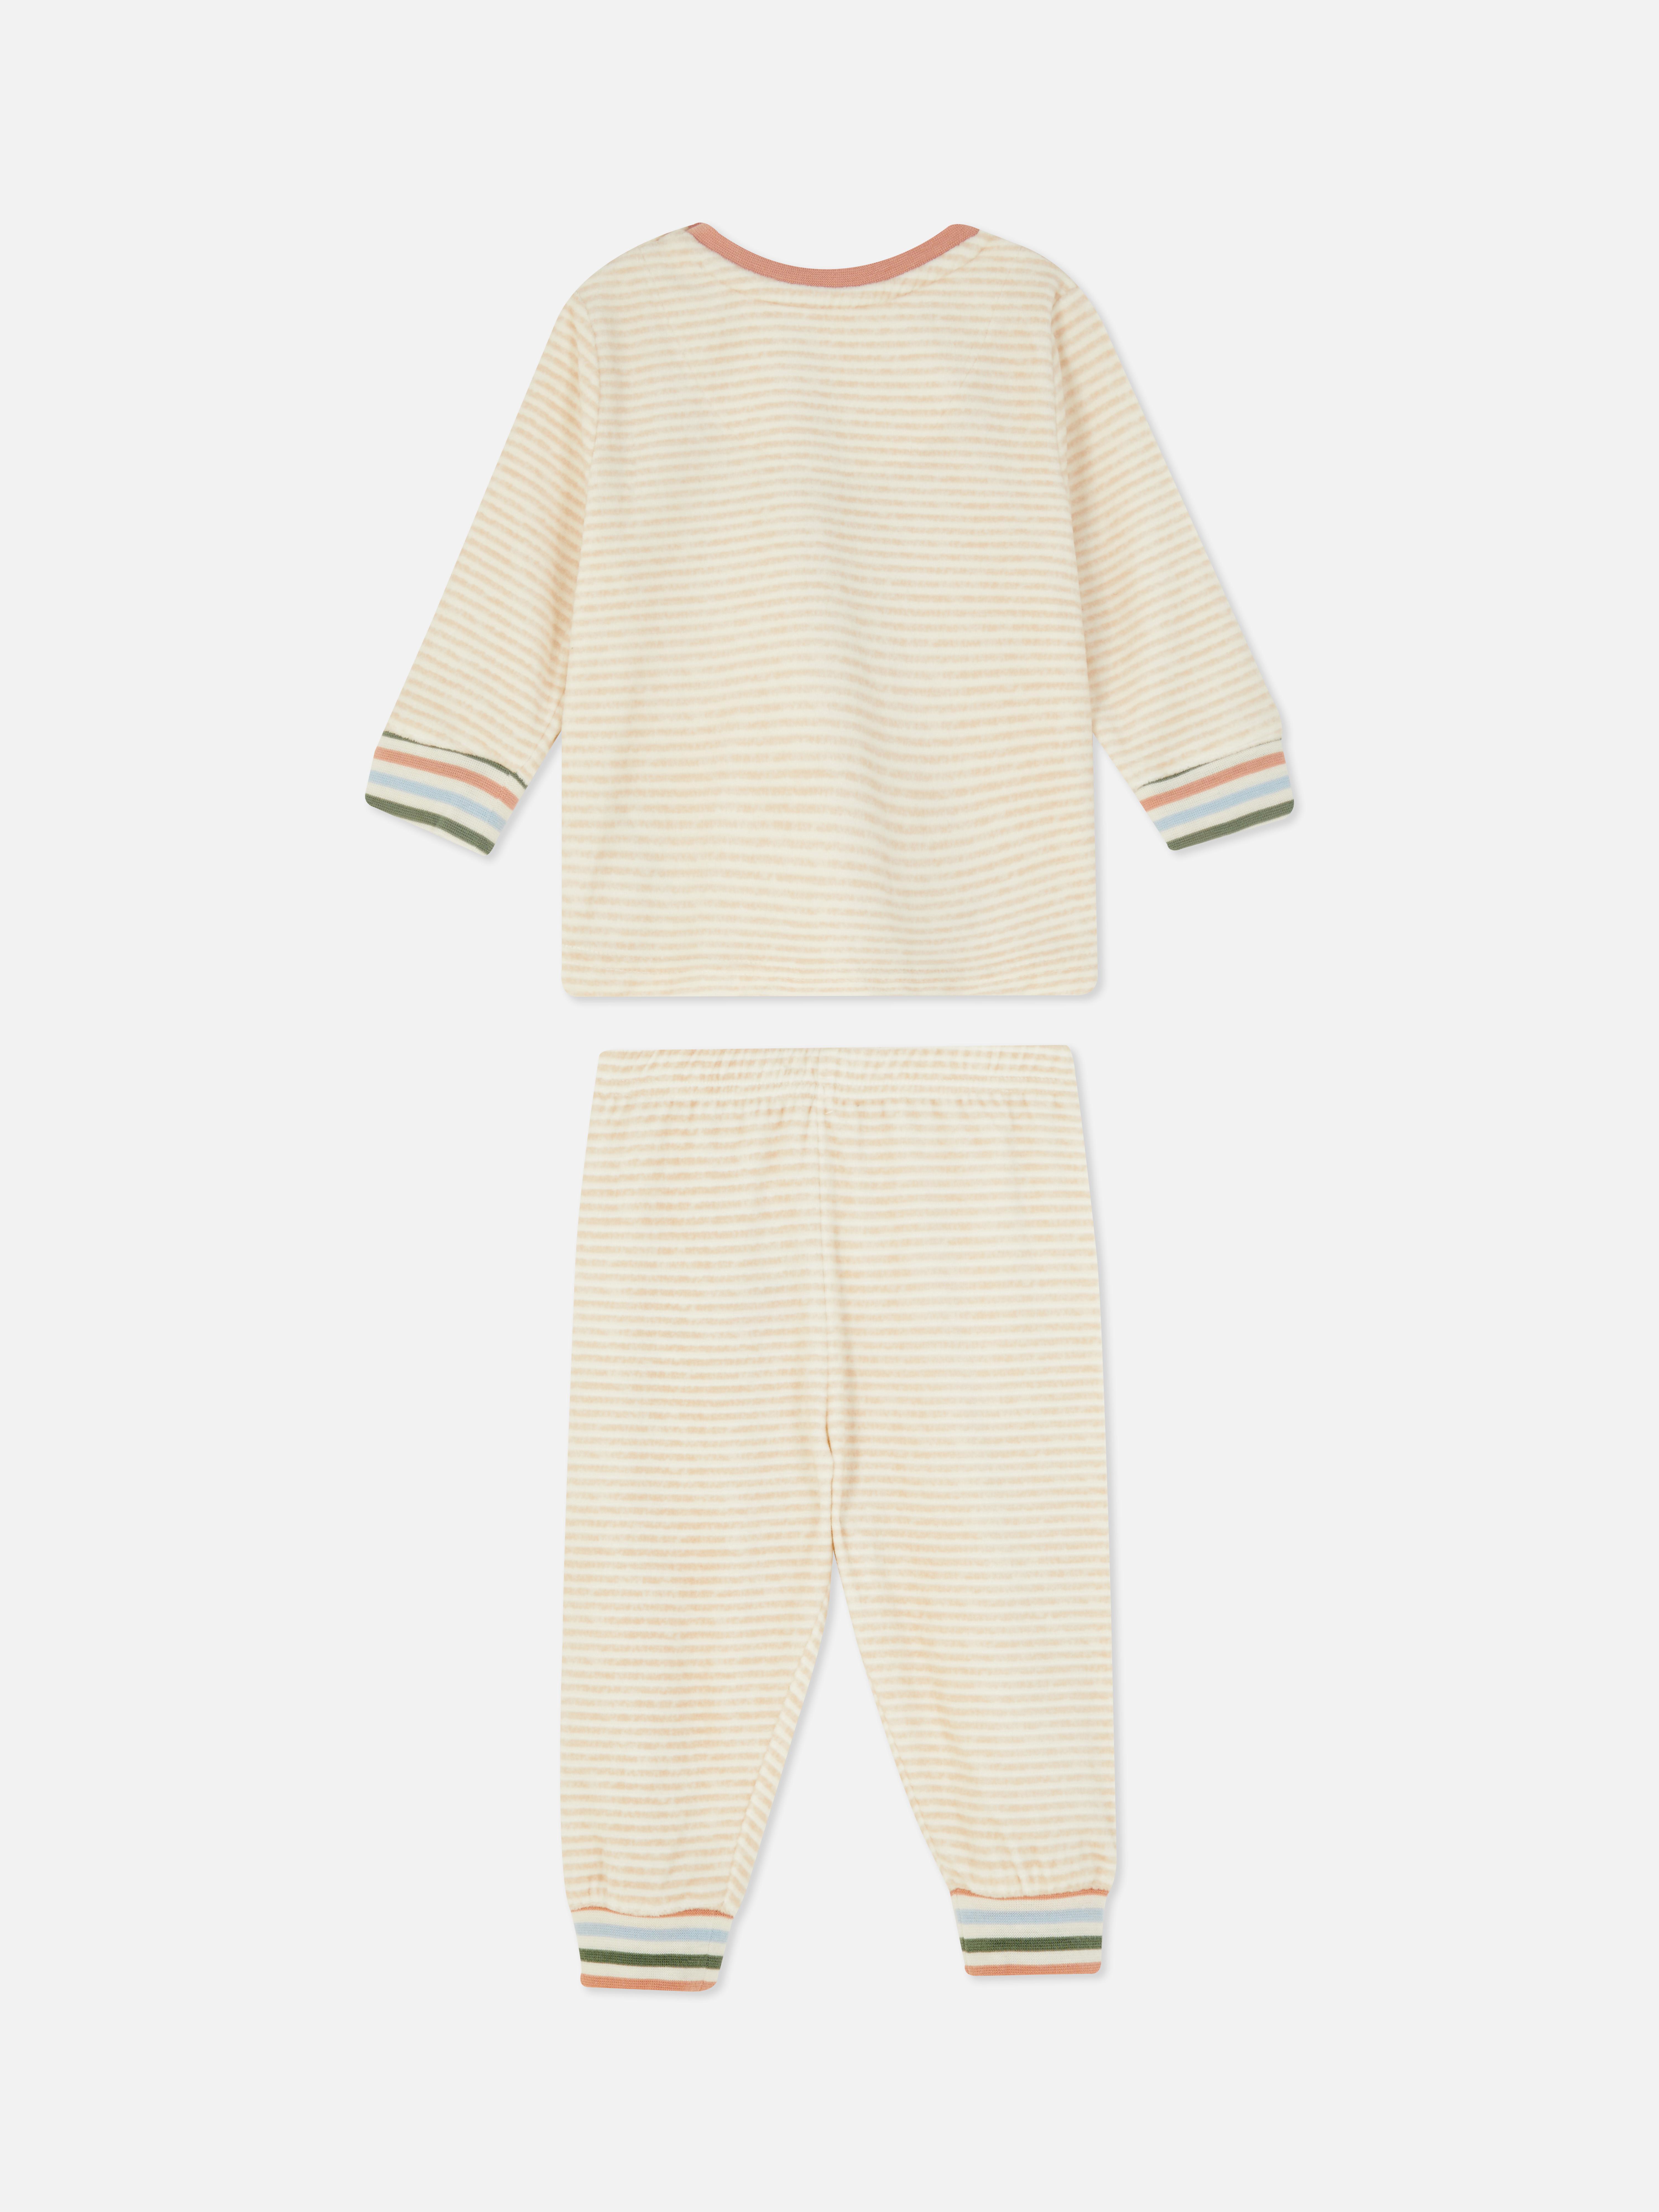 Stacey Solomon Striped Pyjama Set